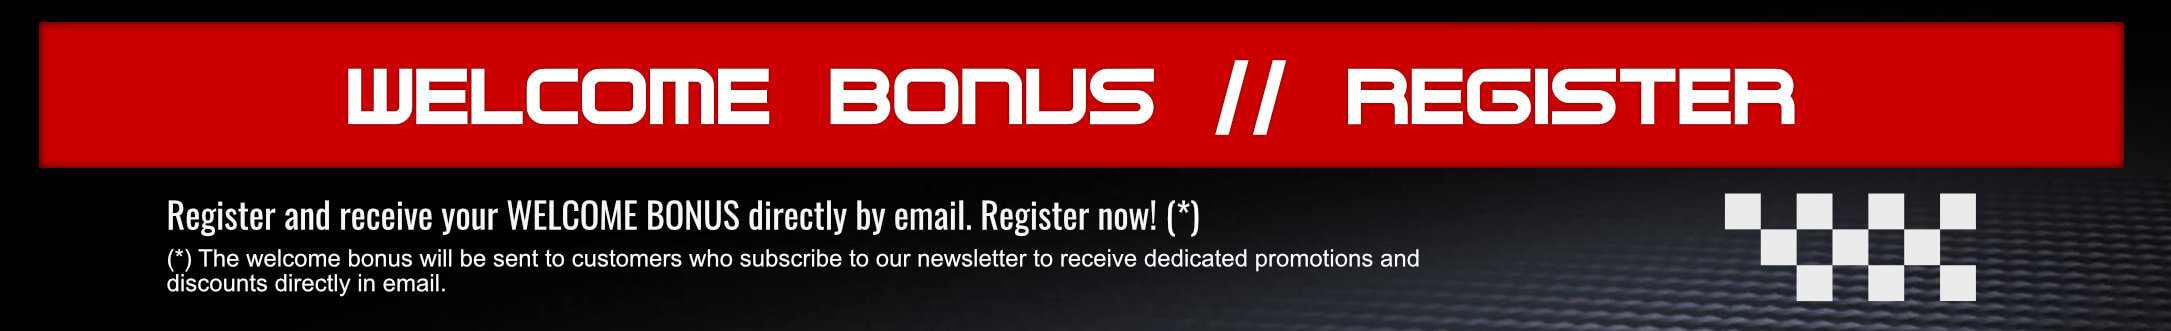 Welcome bonus // Register now!